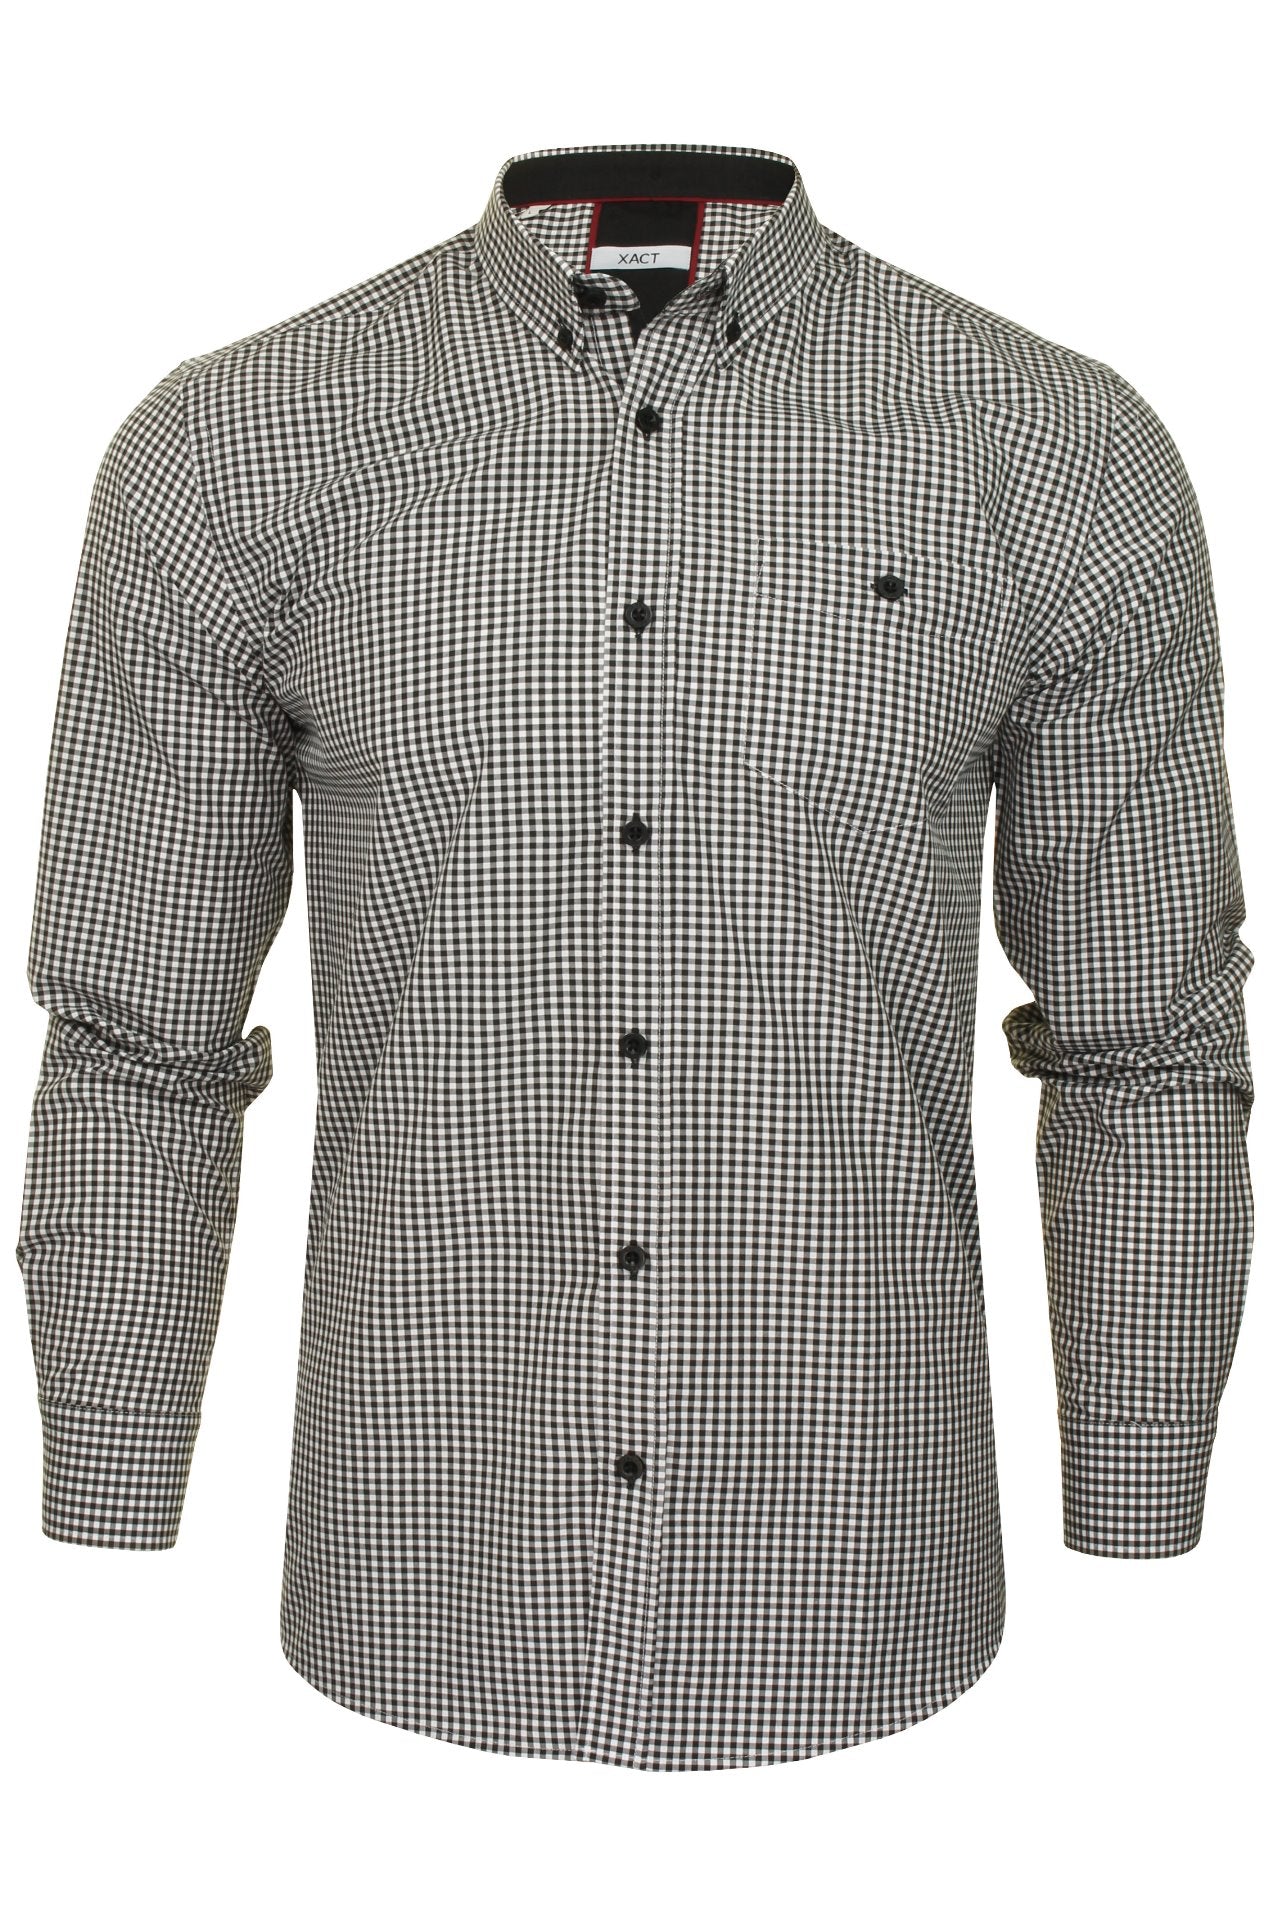 Xact Mens Slim Fit Gingham Check Shirt - Long Sleeved-2